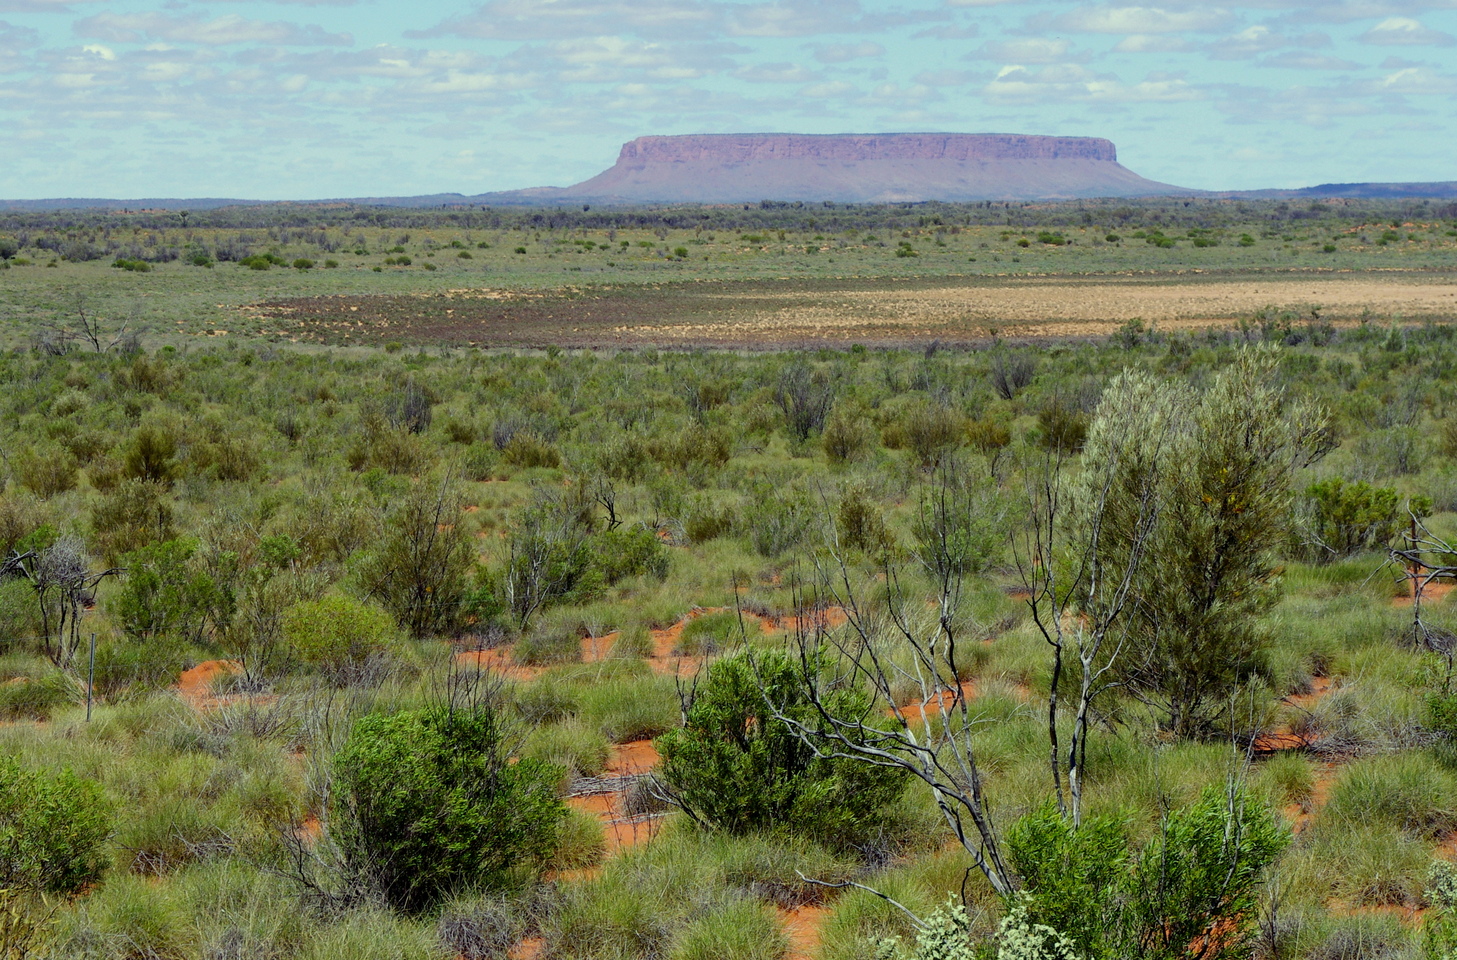 Green growth flourishing in central Australia, 2011. Eva van Gorsel, CC BY-NC-ND